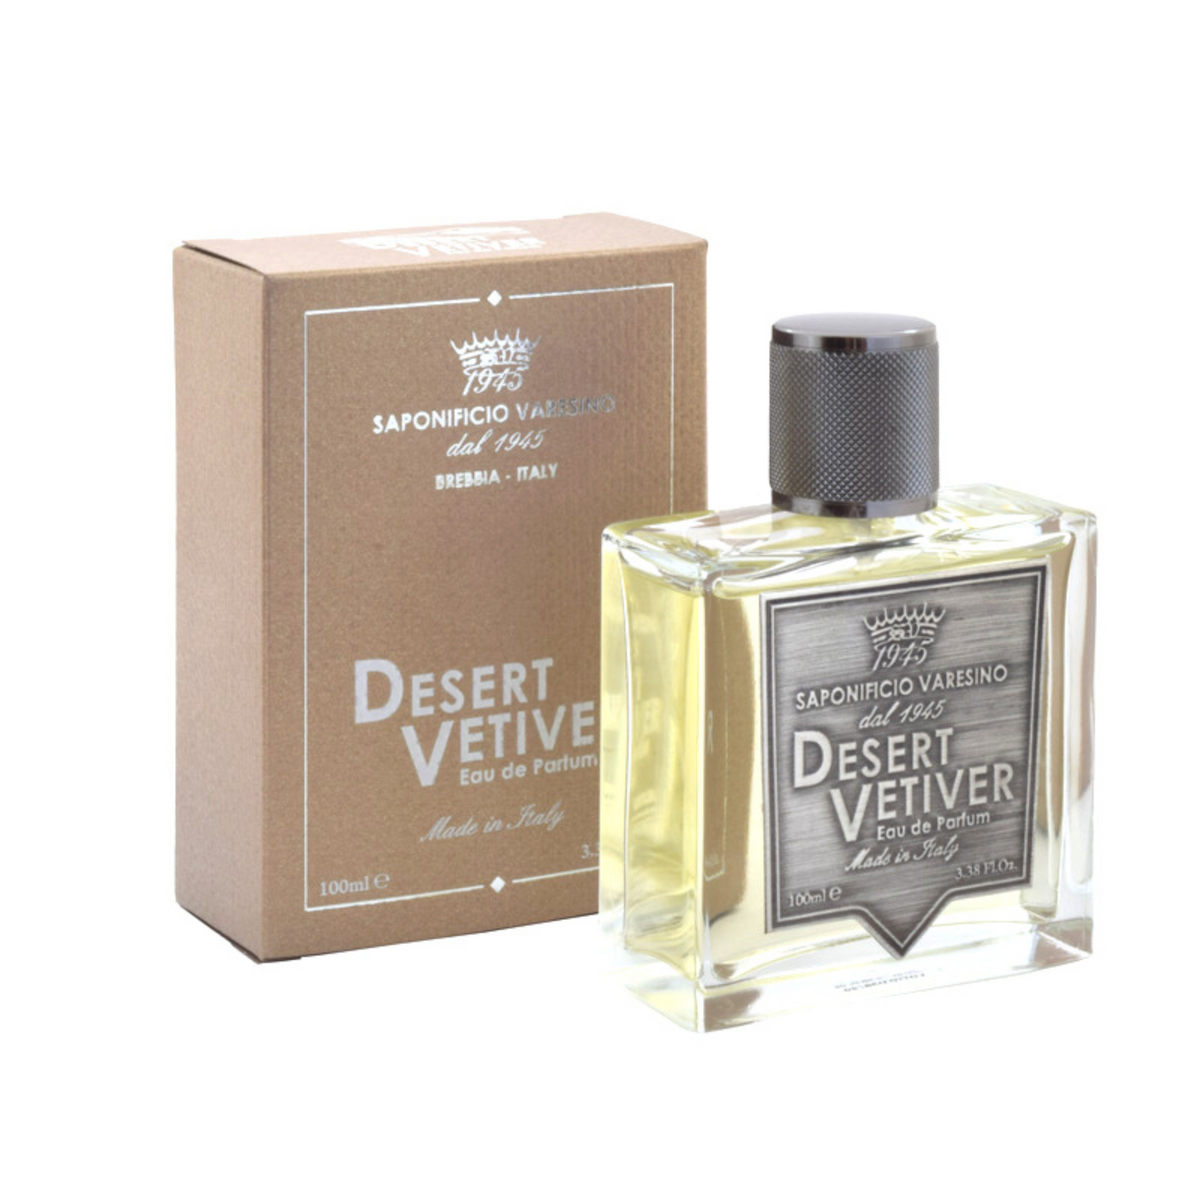 Primary Image of Saponificio Varesino Desert Vetiver Eau De Parfum (100 ml)